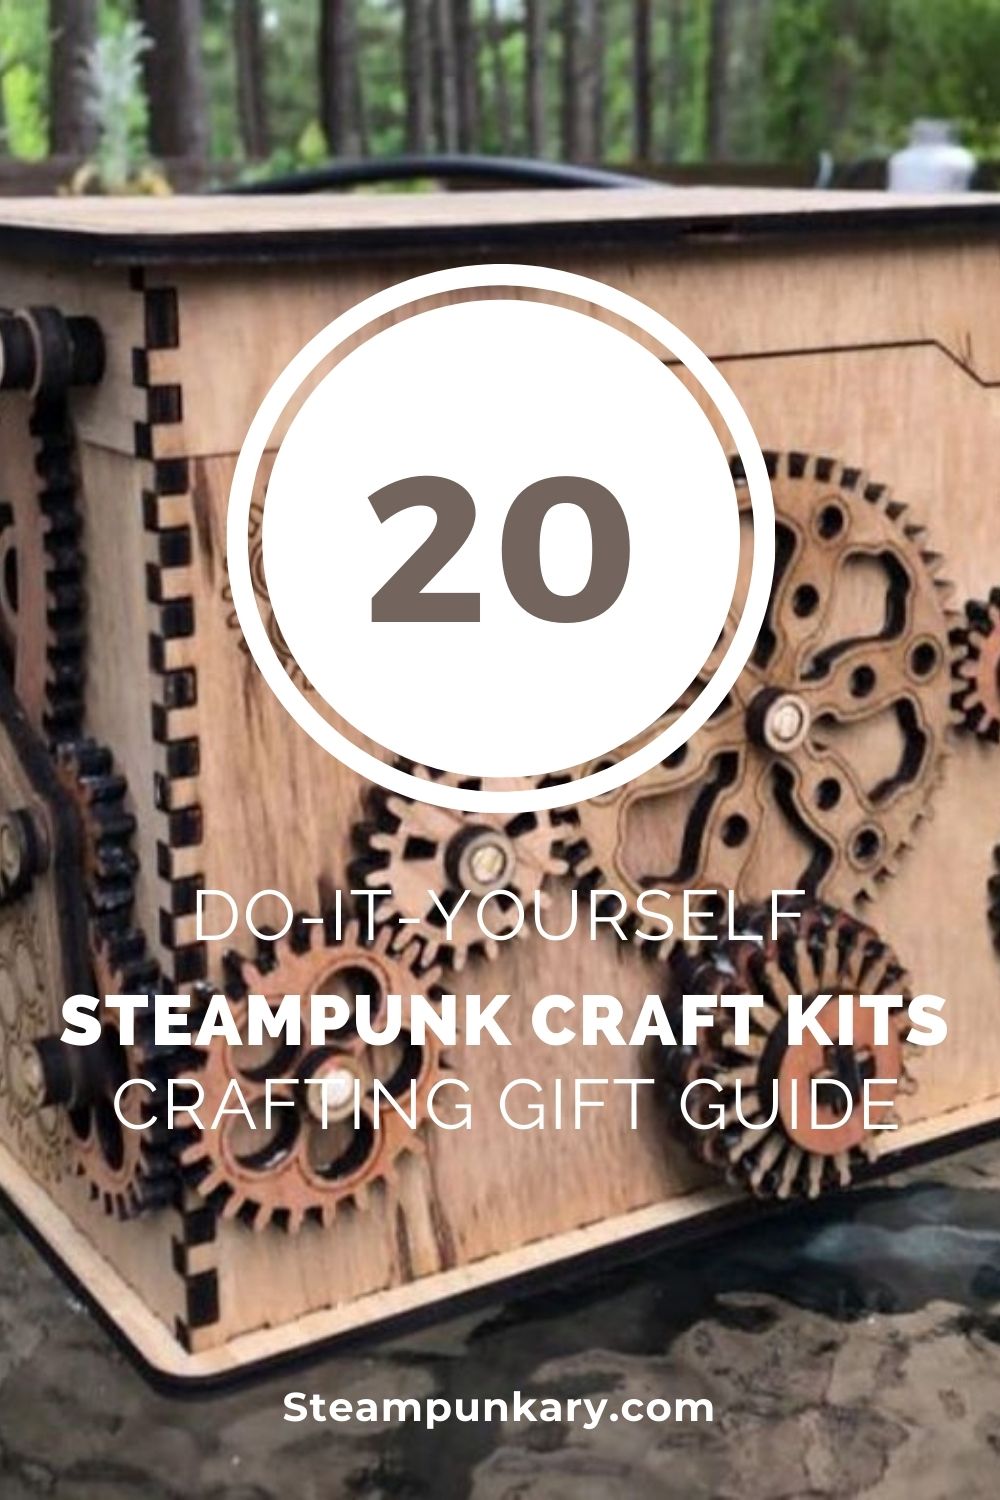 12 DIY Craft Kits That Make Great Gifts | Hunker